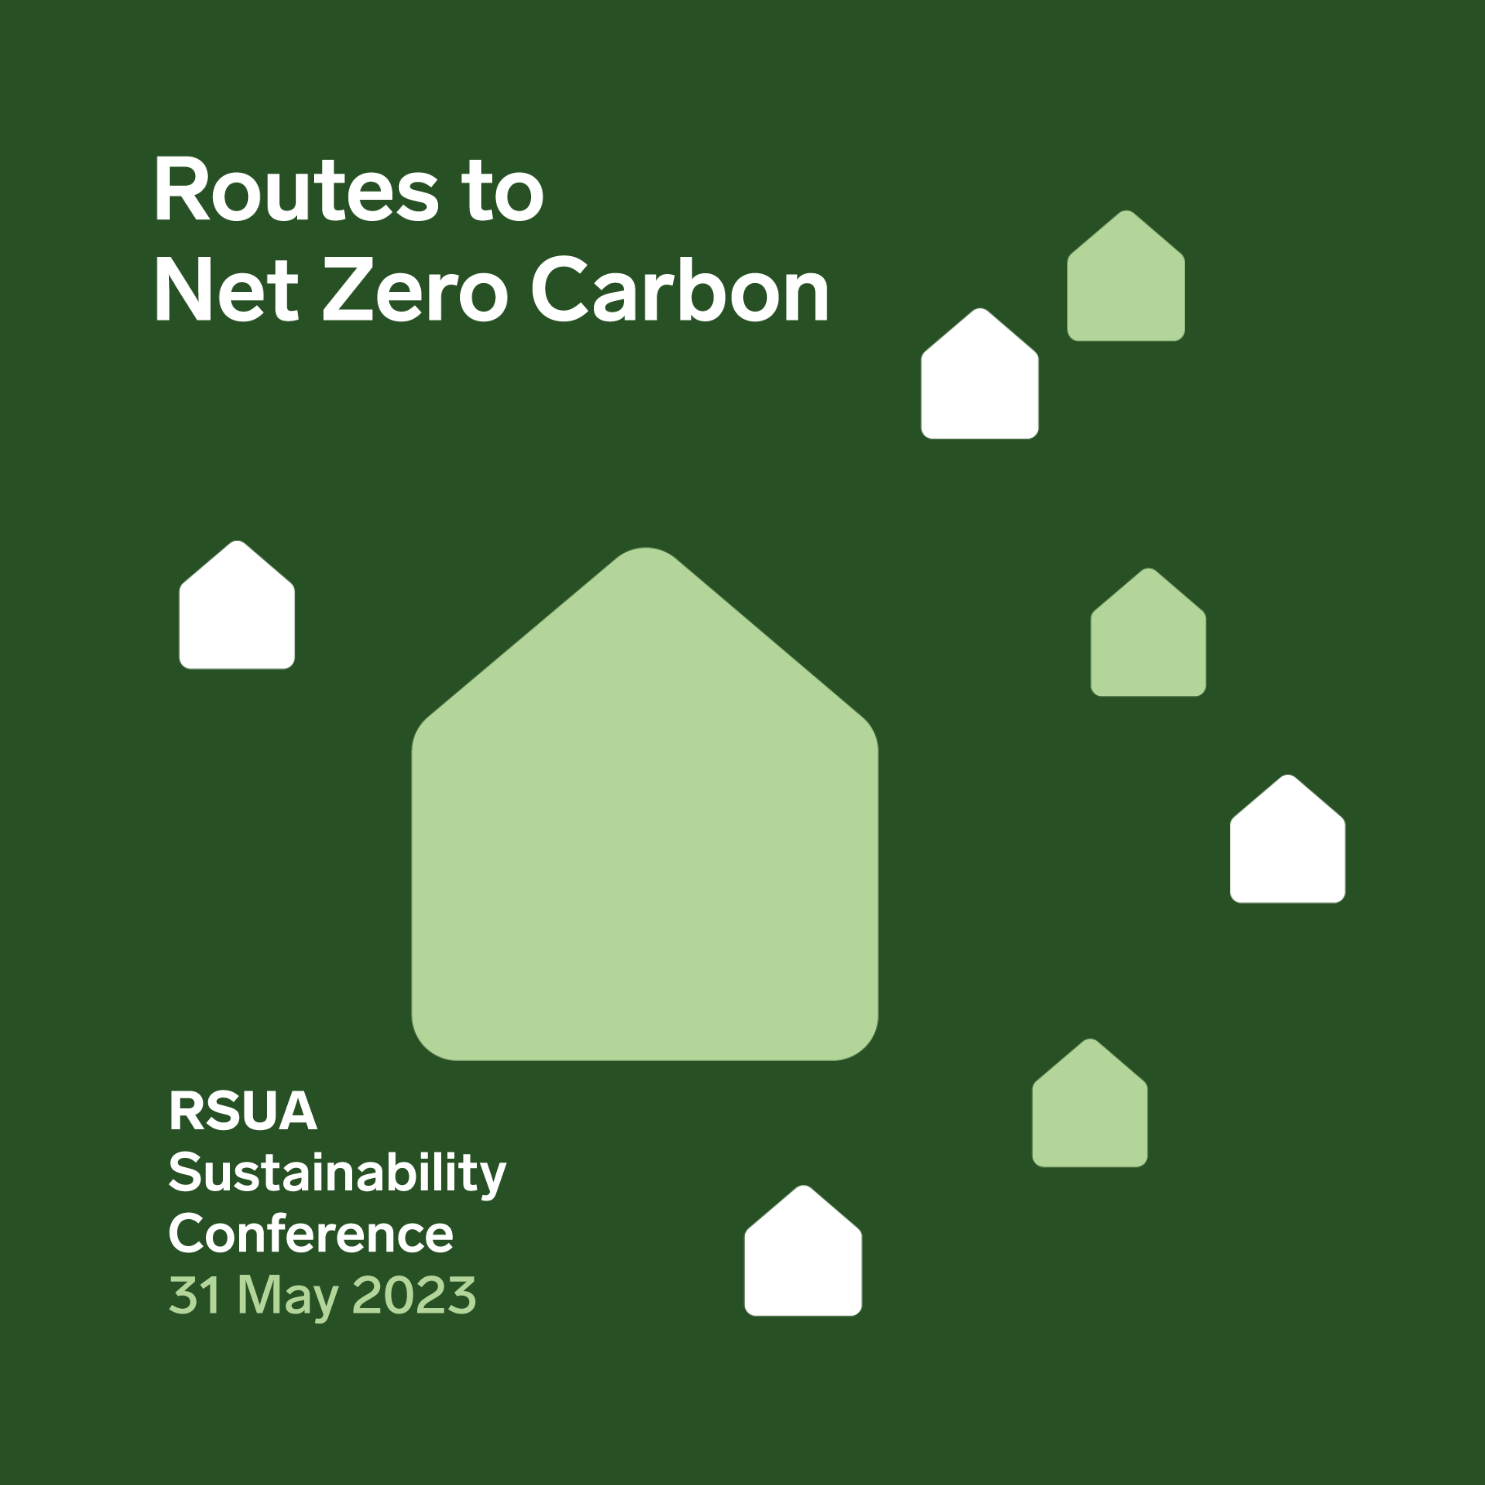 RSUA Sustainability Conference – Routes to Net Zero